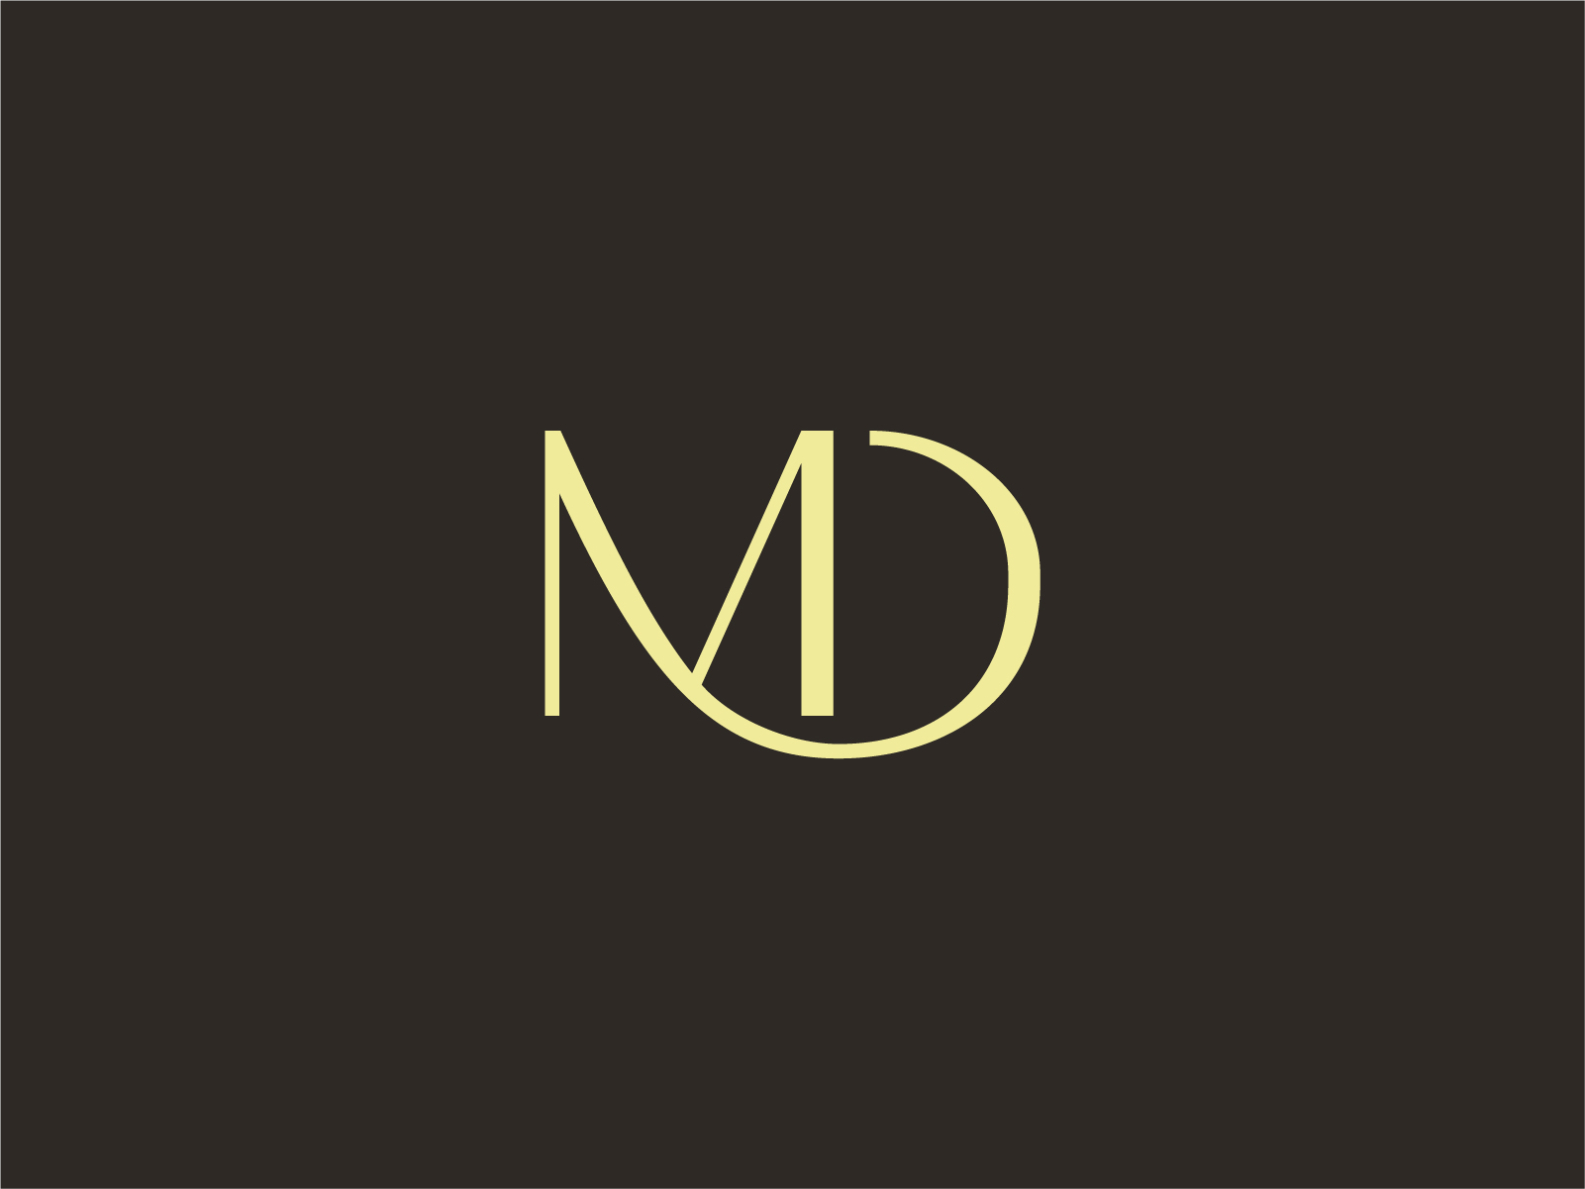 MAD/MD Monogram by Eko Anug on Dribbble